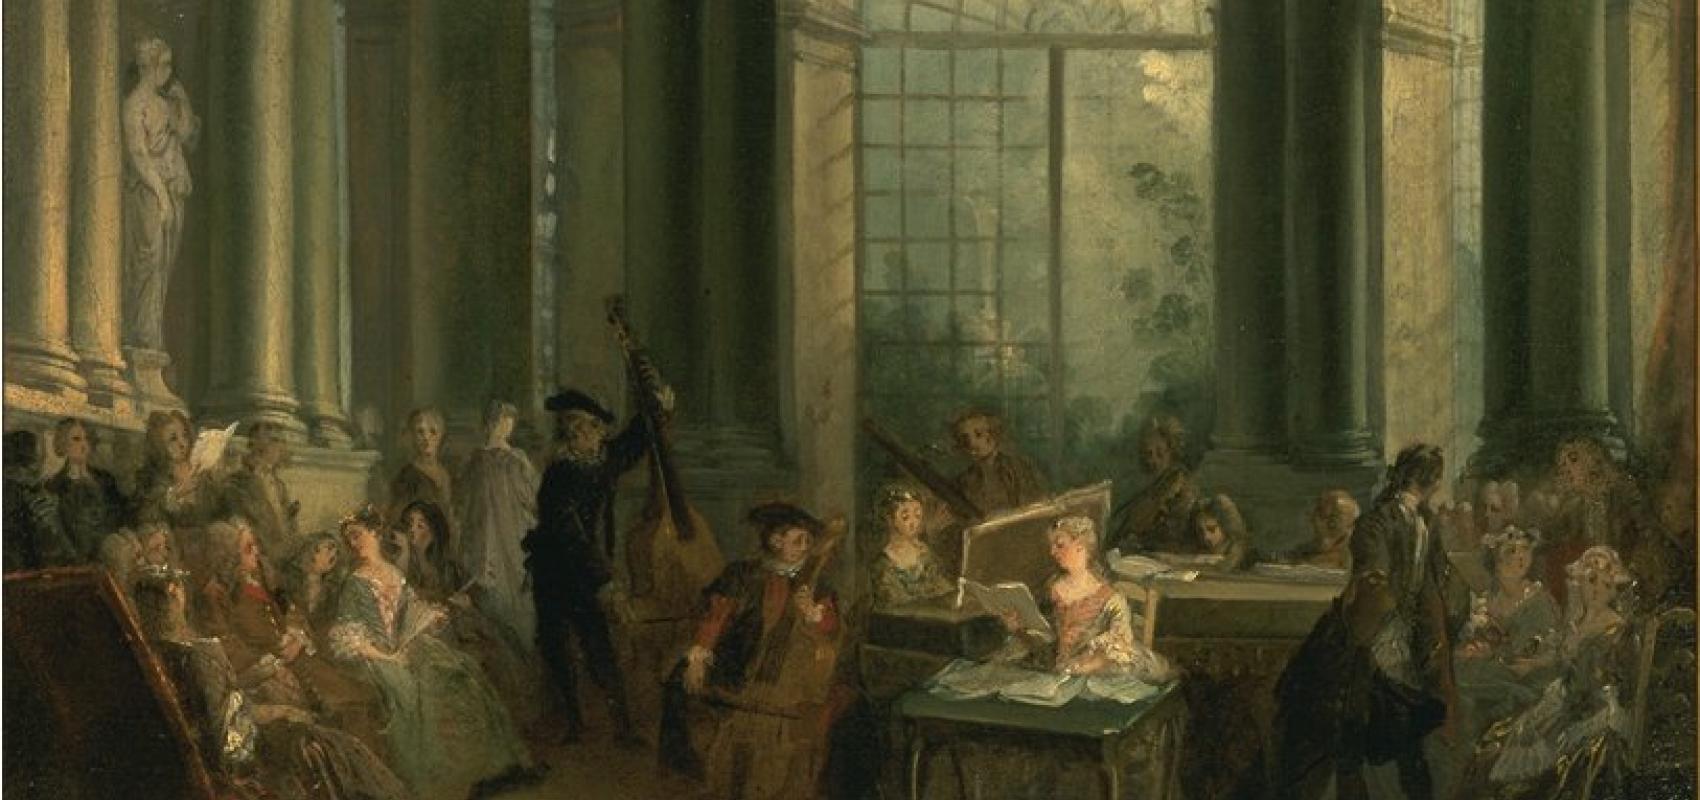 Concert dans le salon ovale de Pierre Crozat - vers 1720-1724 - Nicolas Lancret - Source : www.wikimedia.org